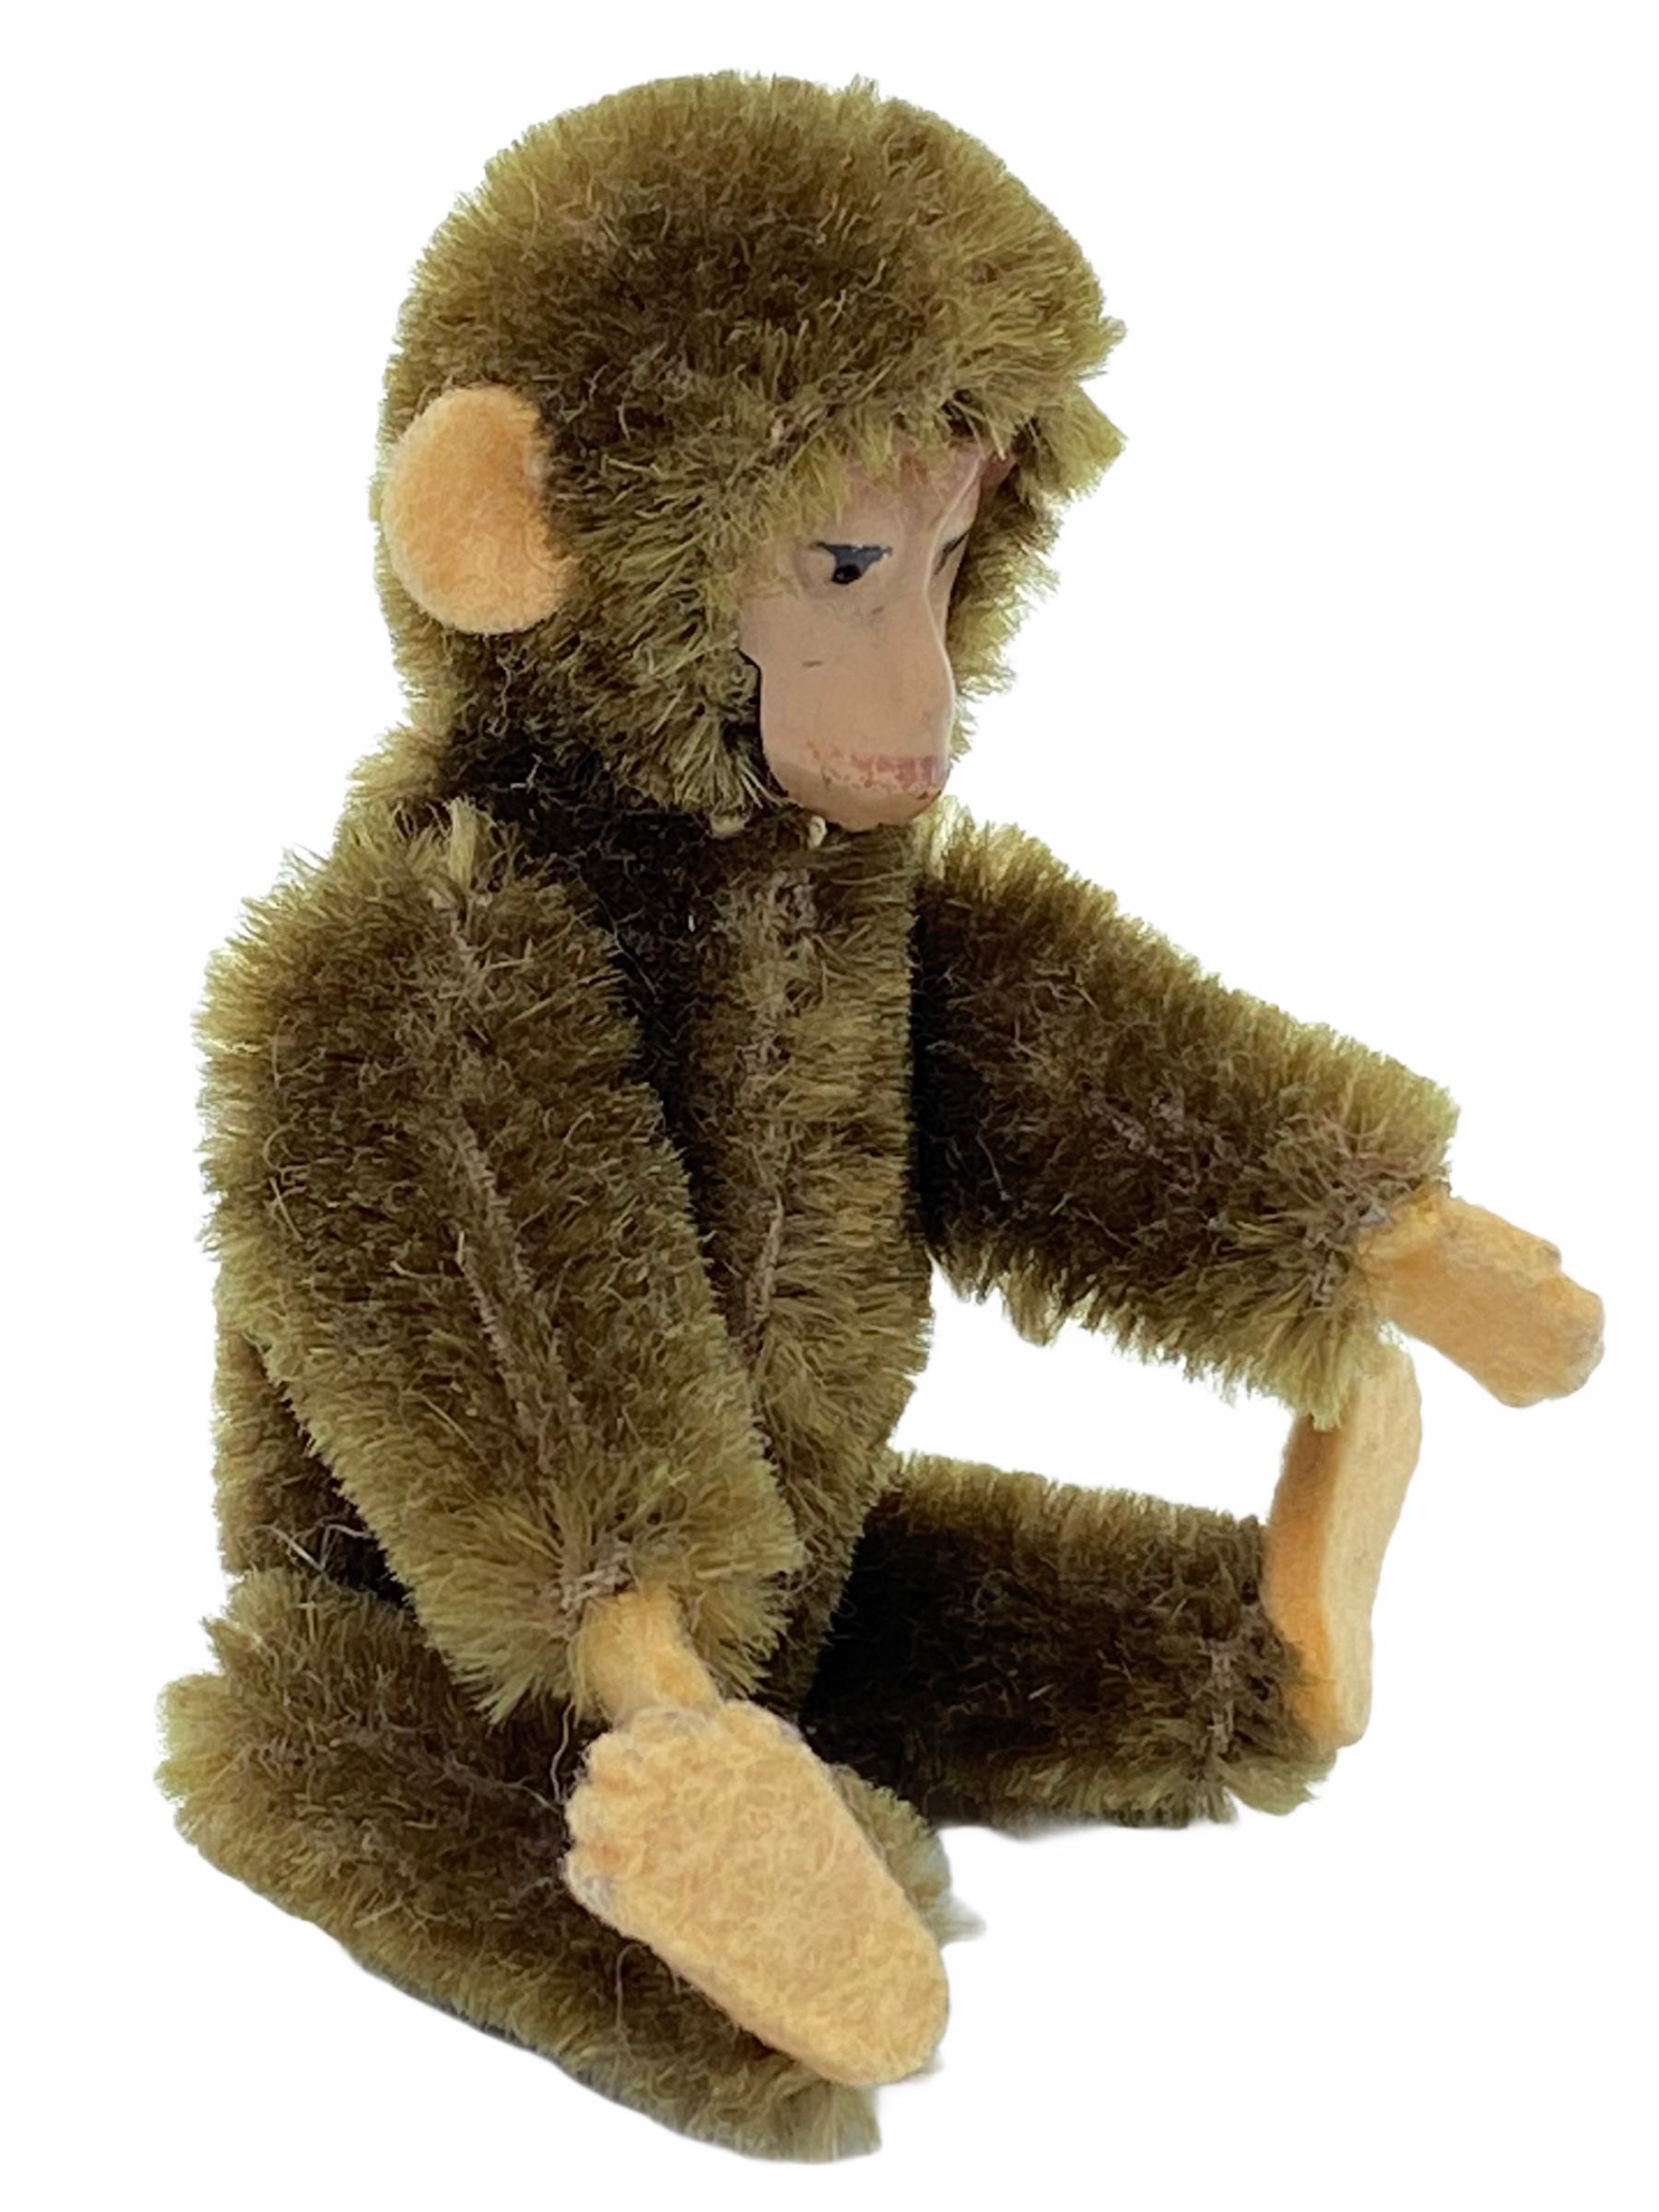 antique monkey toy